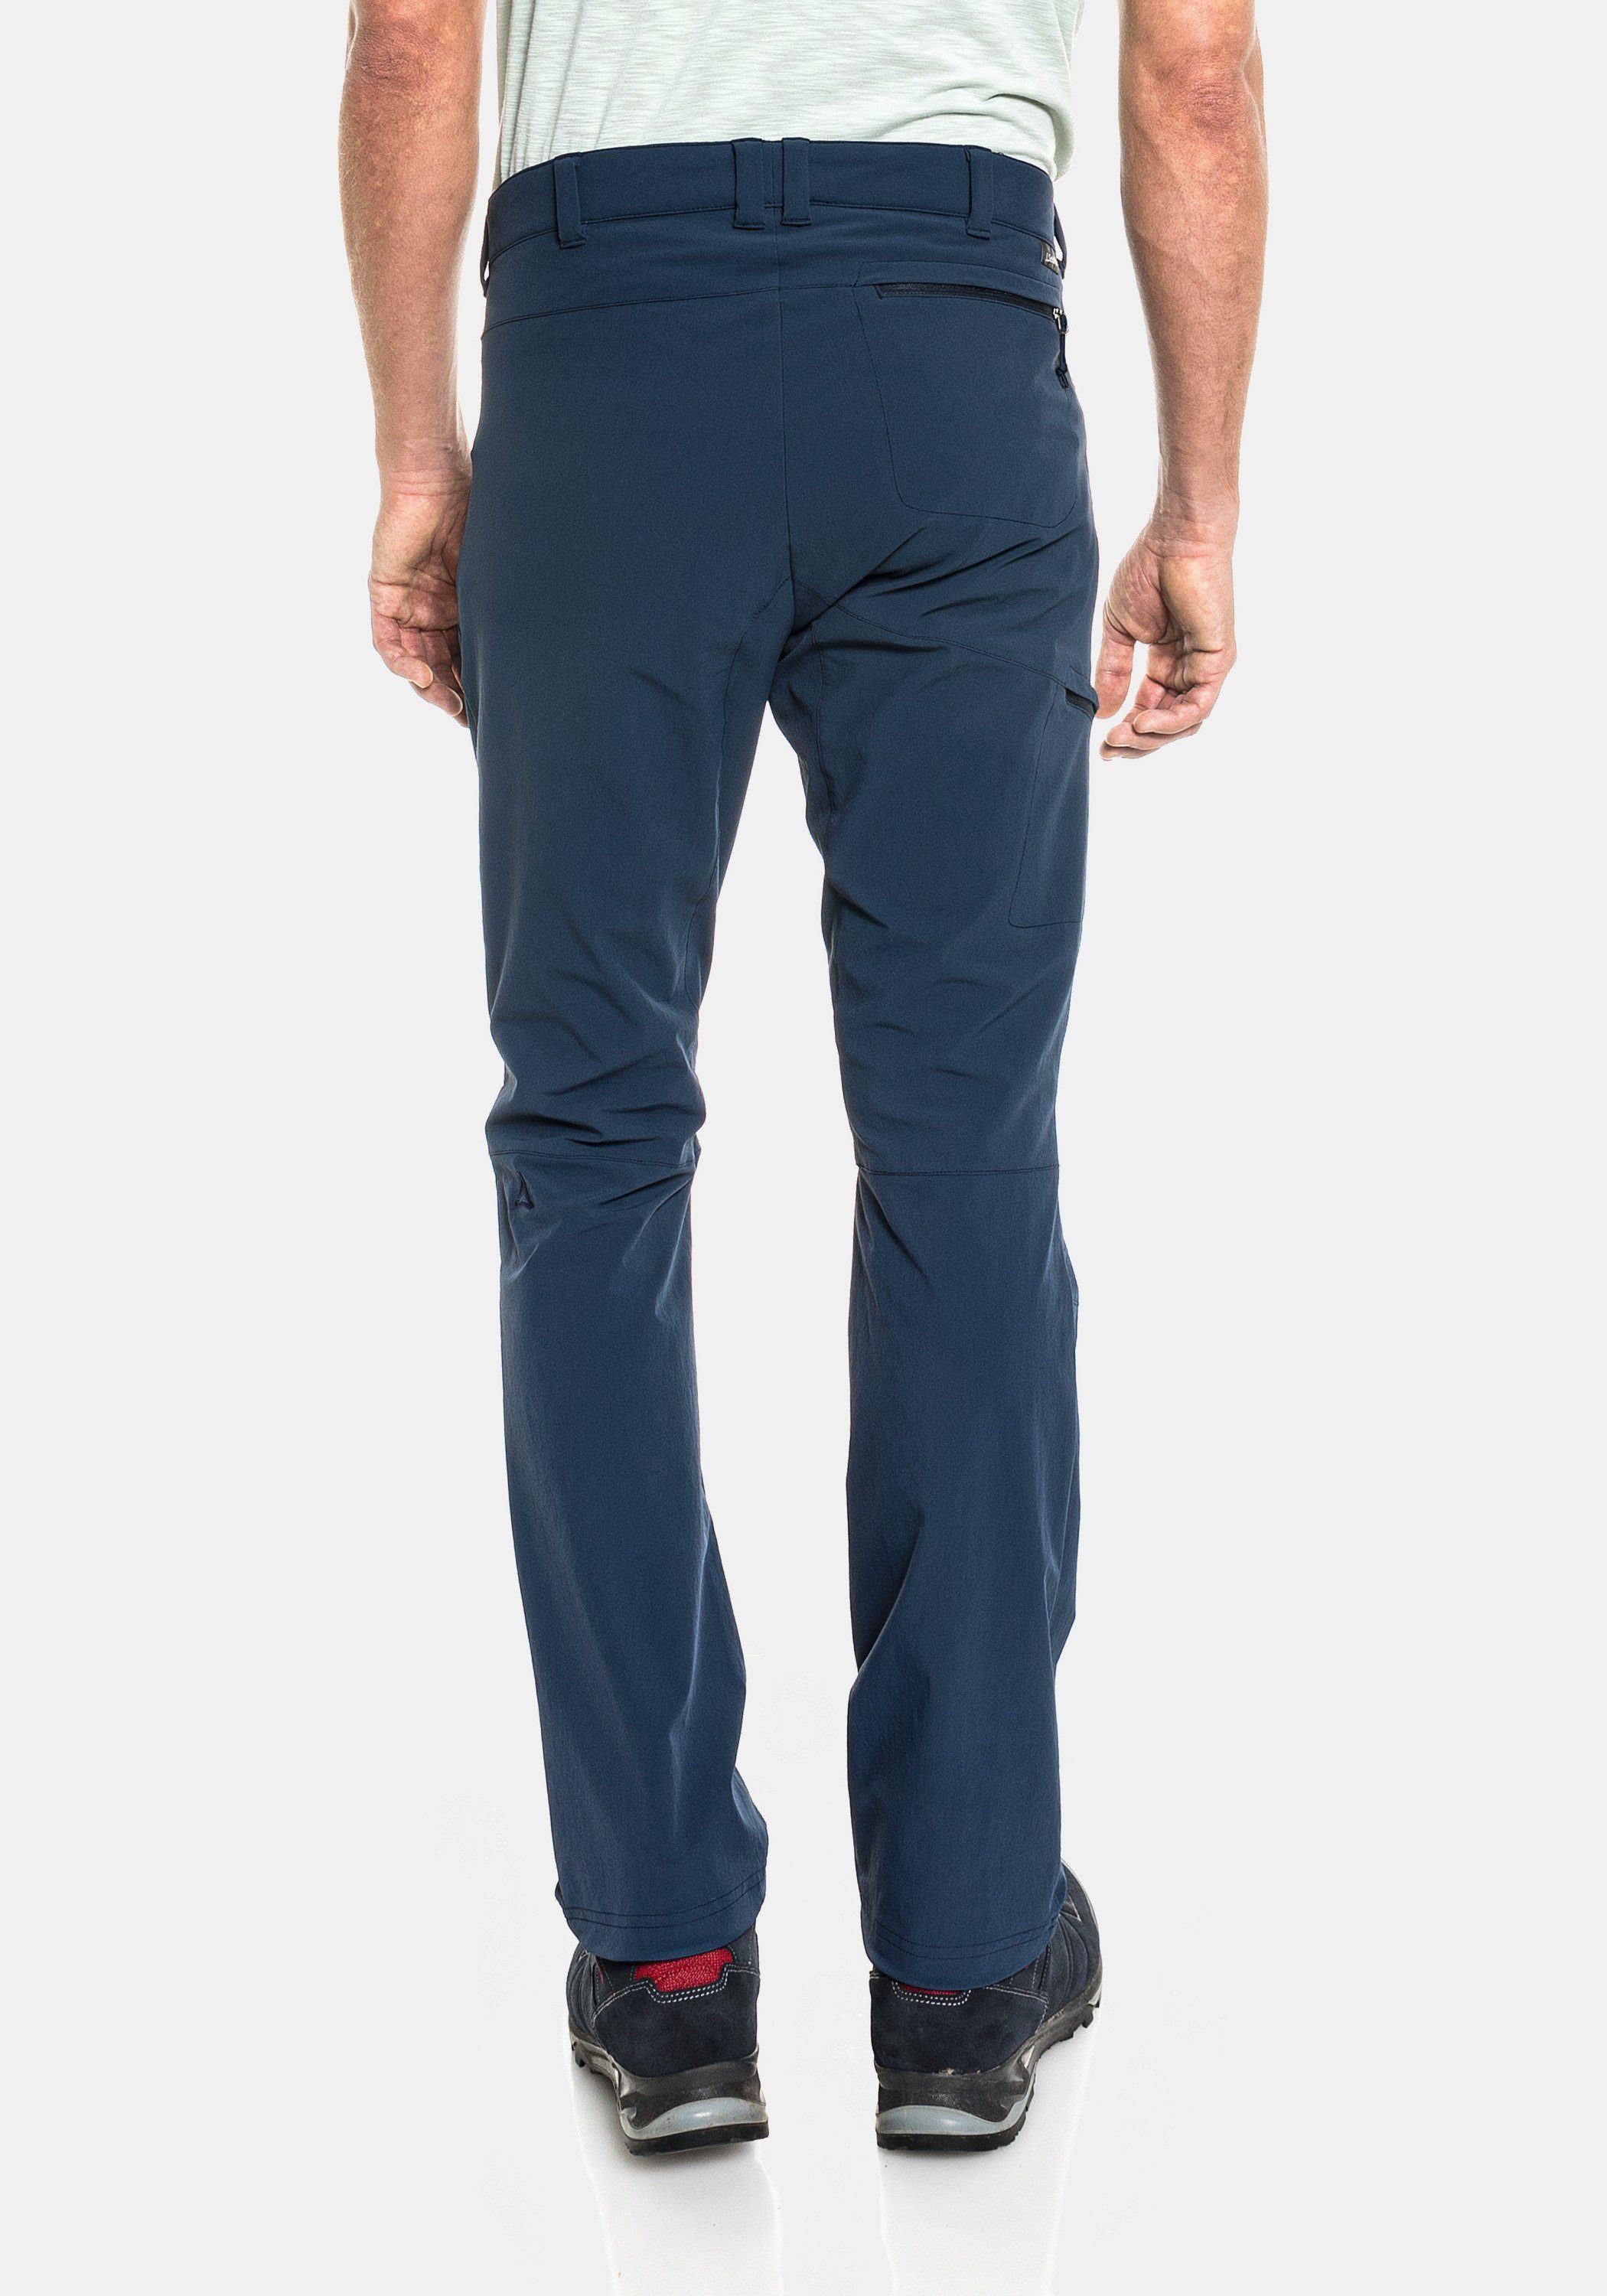 Schöffel Koper1 dunkelblau Outdoorhose Pants